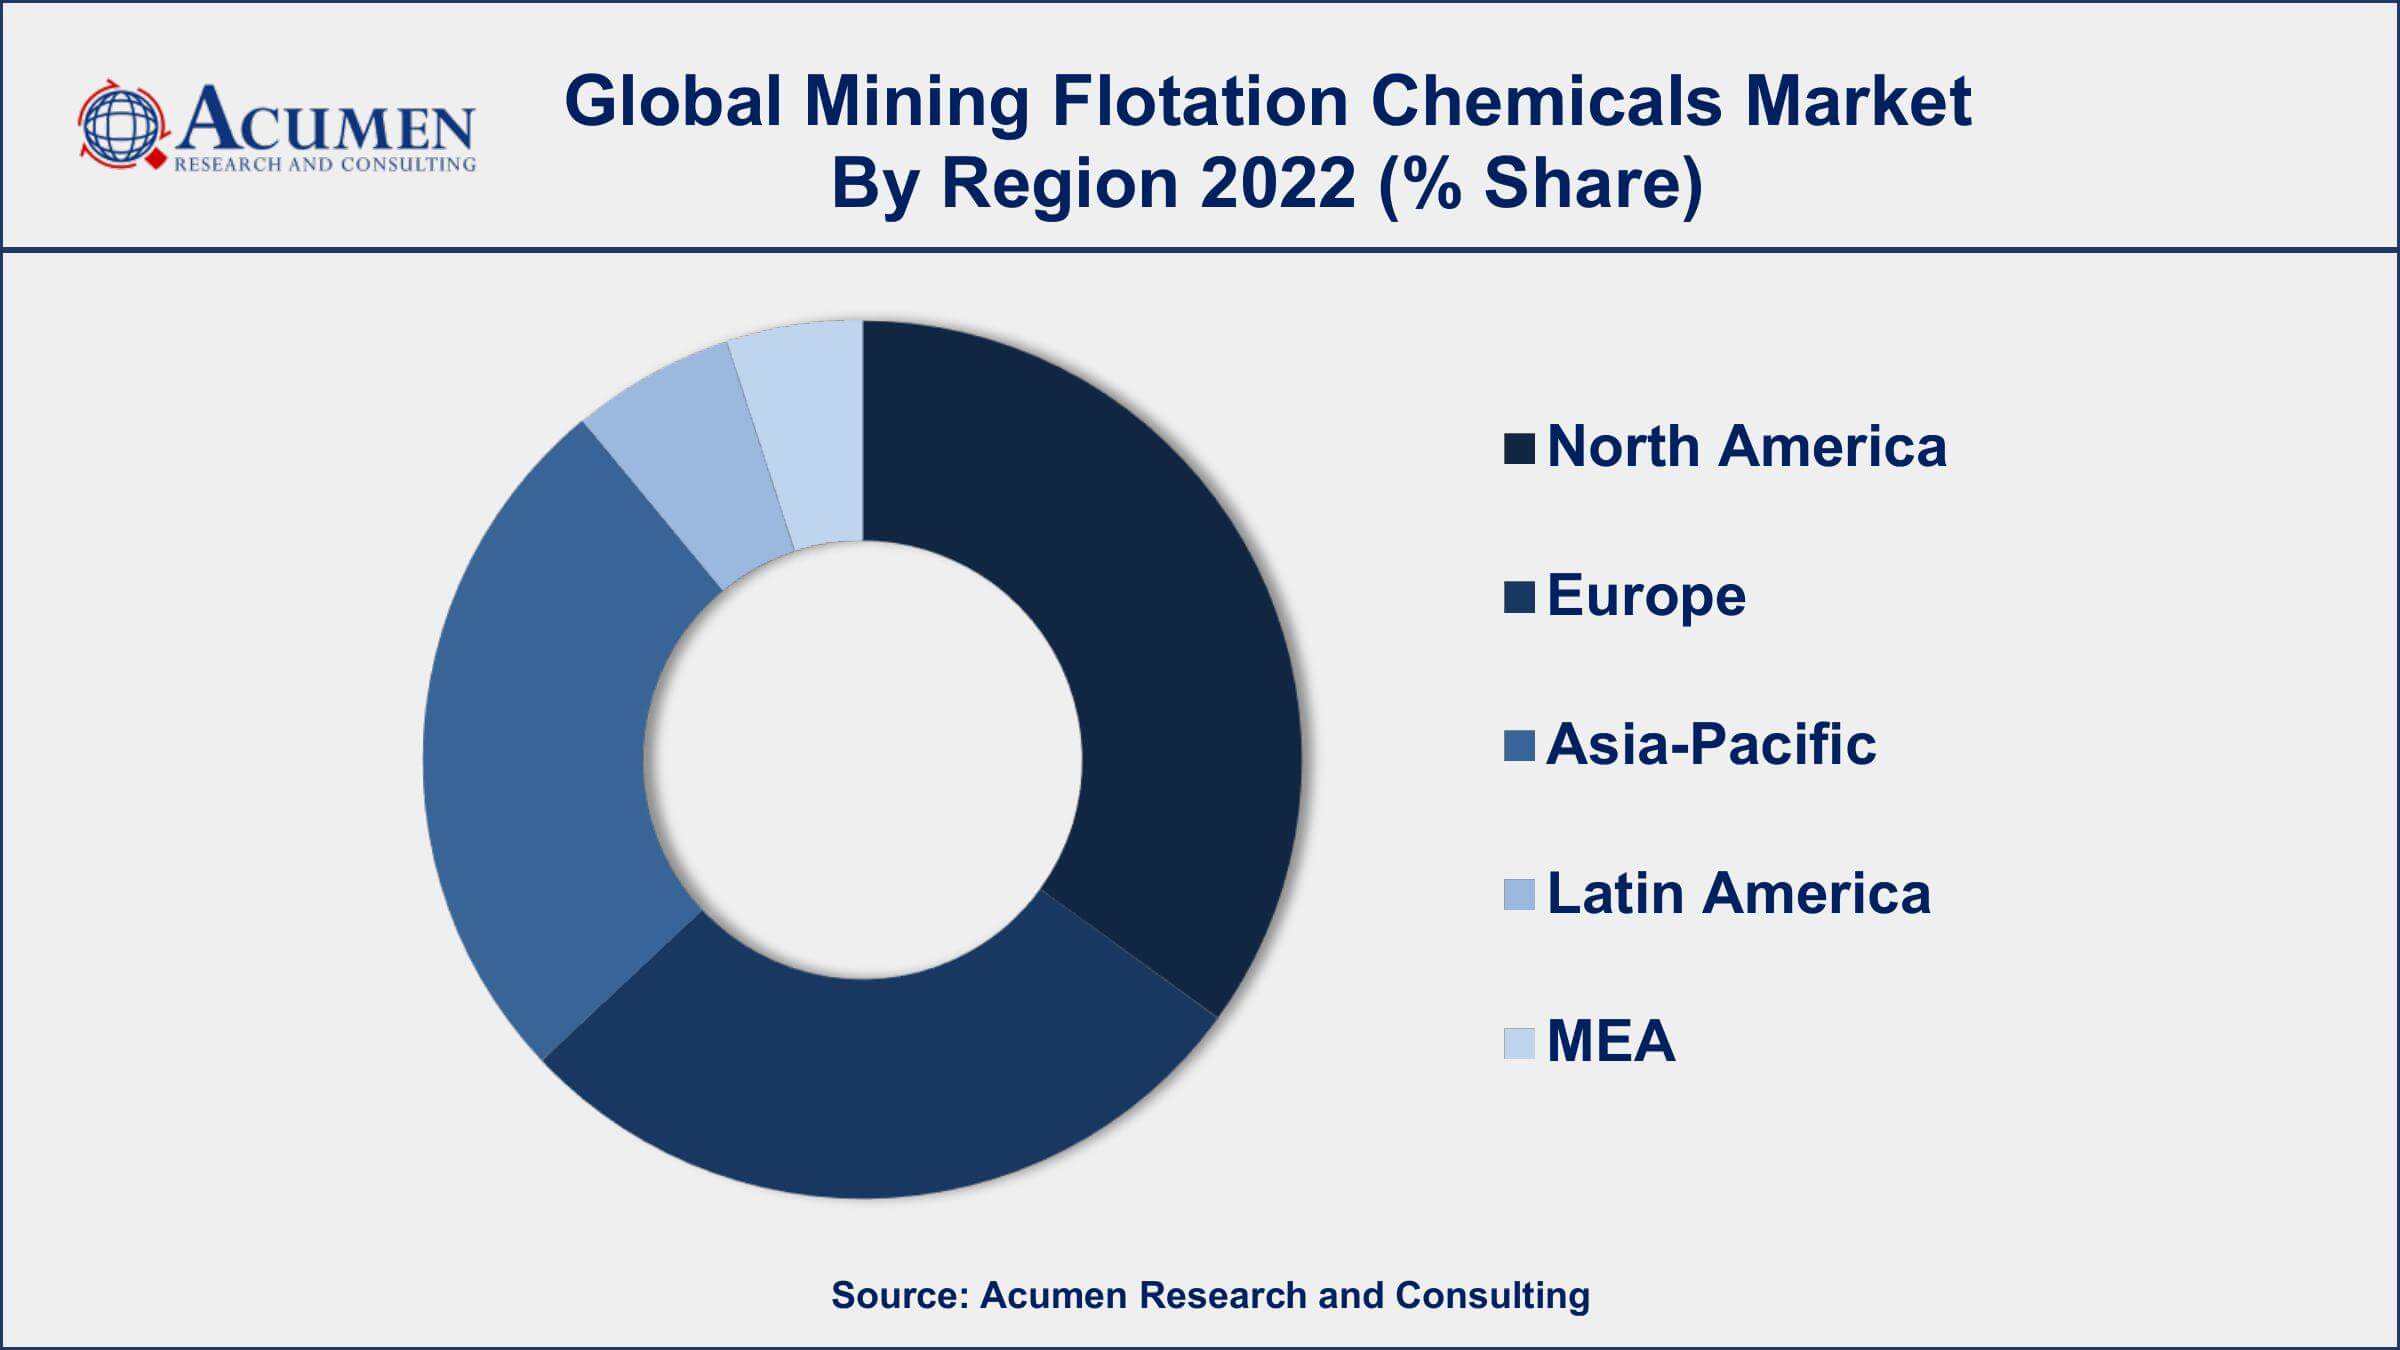 Mining Flotation Chemicals Market Drivers